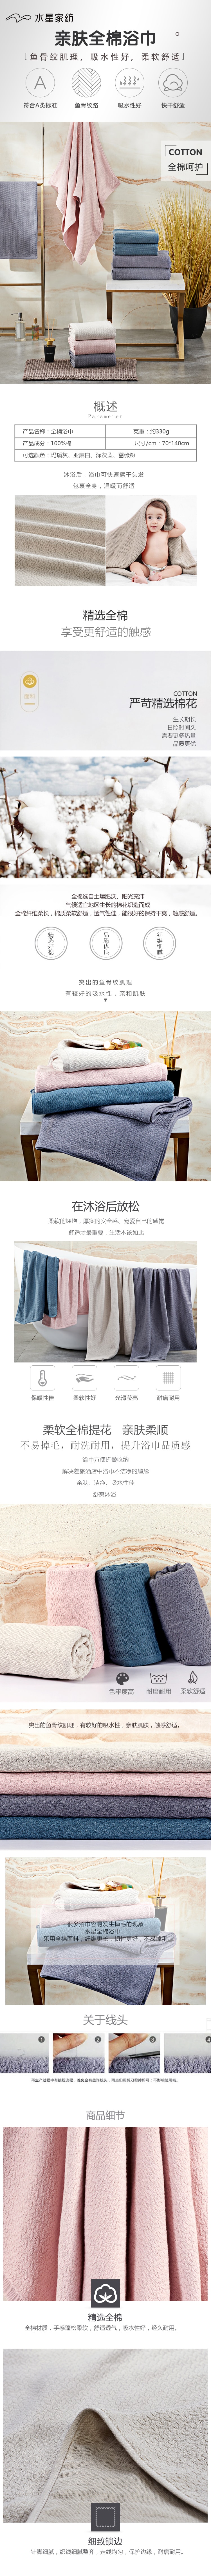 100% Cotton Bath Towel (Herringbone Pattern) - Dark Gray